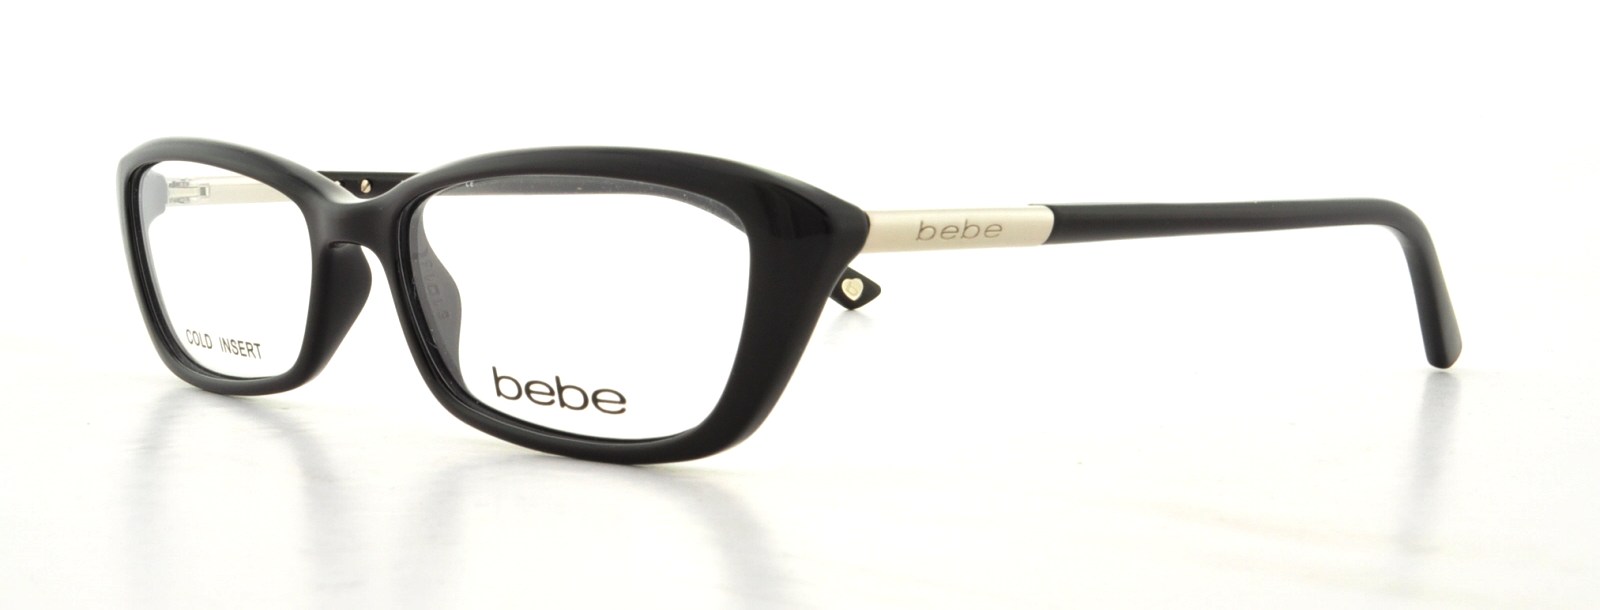 Picture of Bebe Eyeglasses BB5041 Deja View